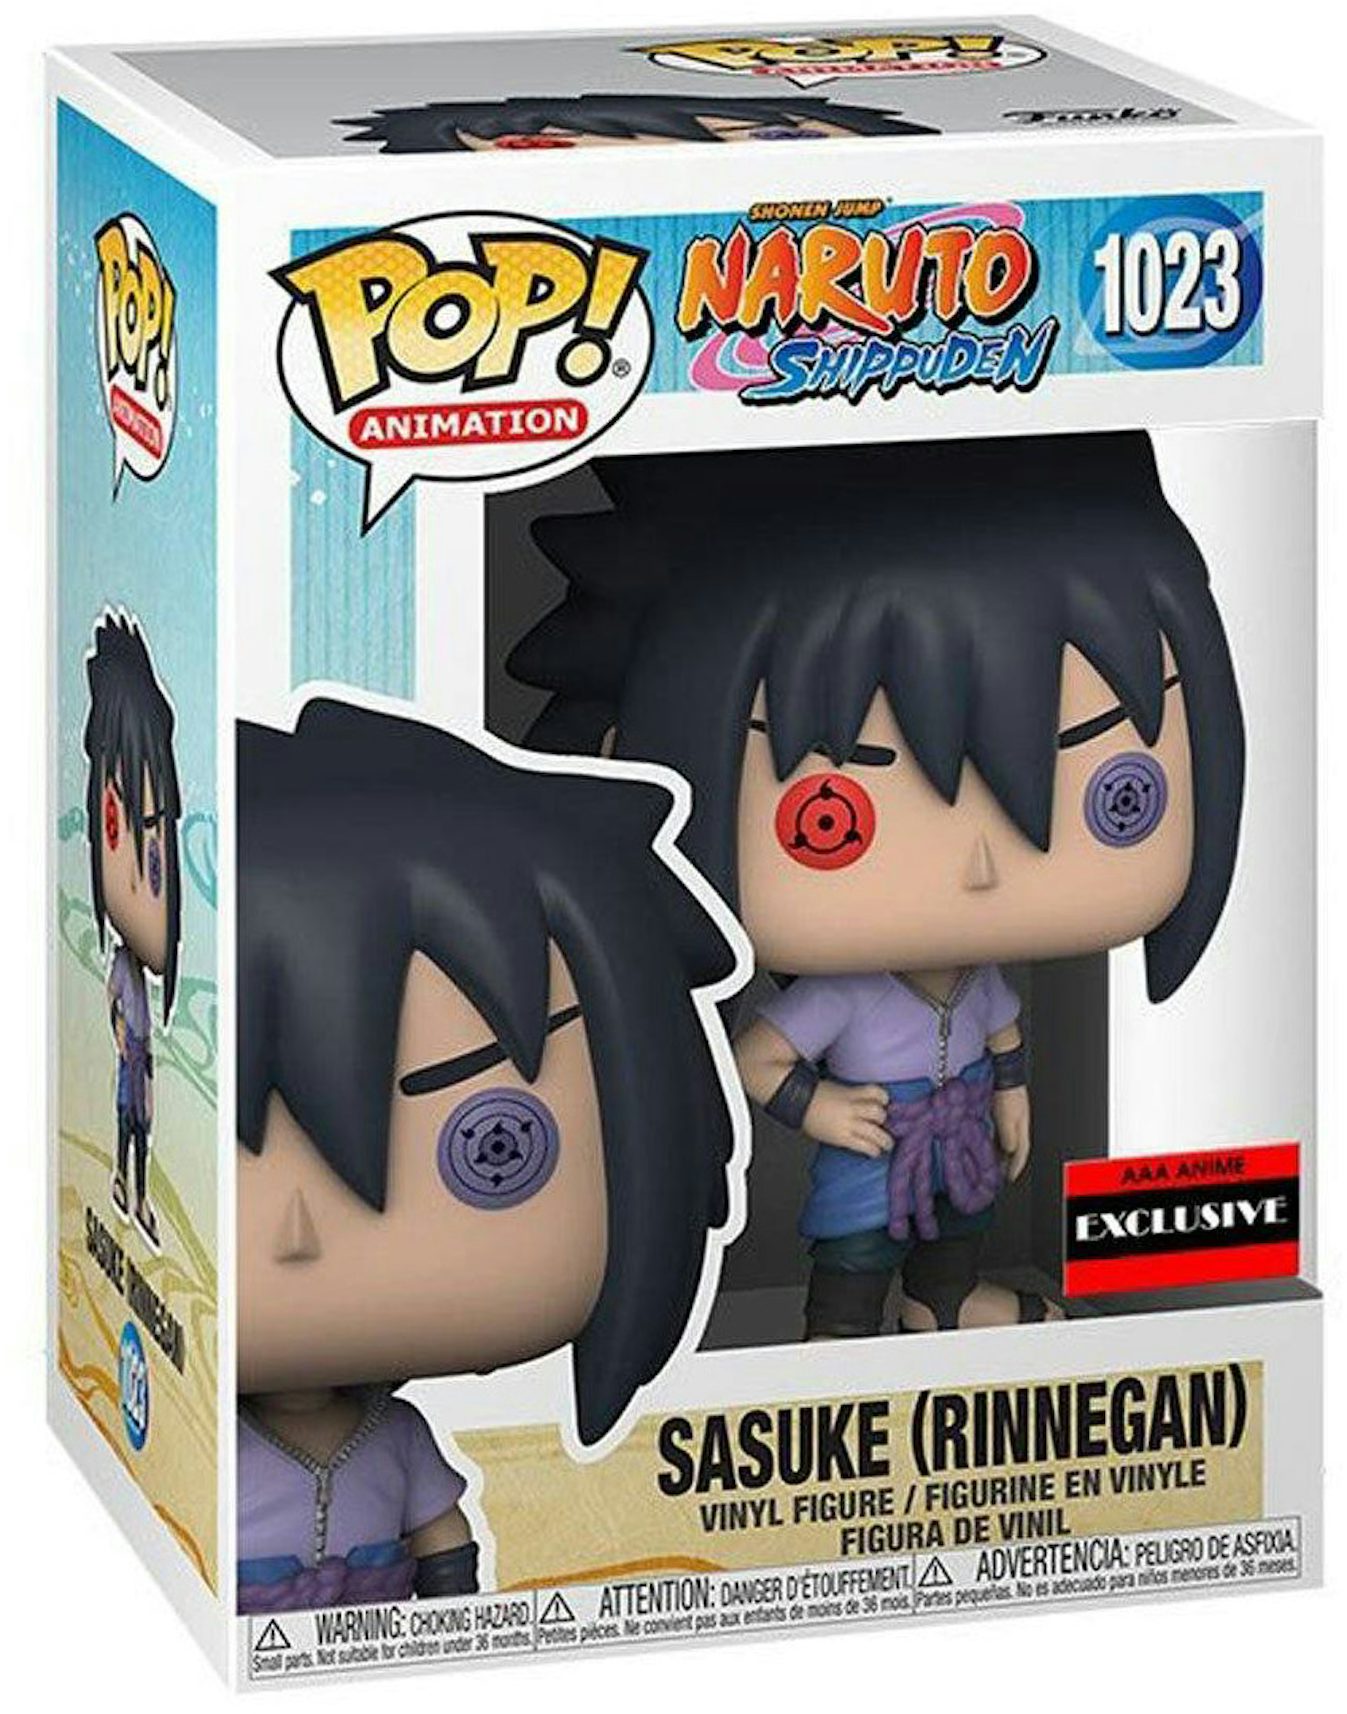 Sasuke's Story' Receives North America Release Date